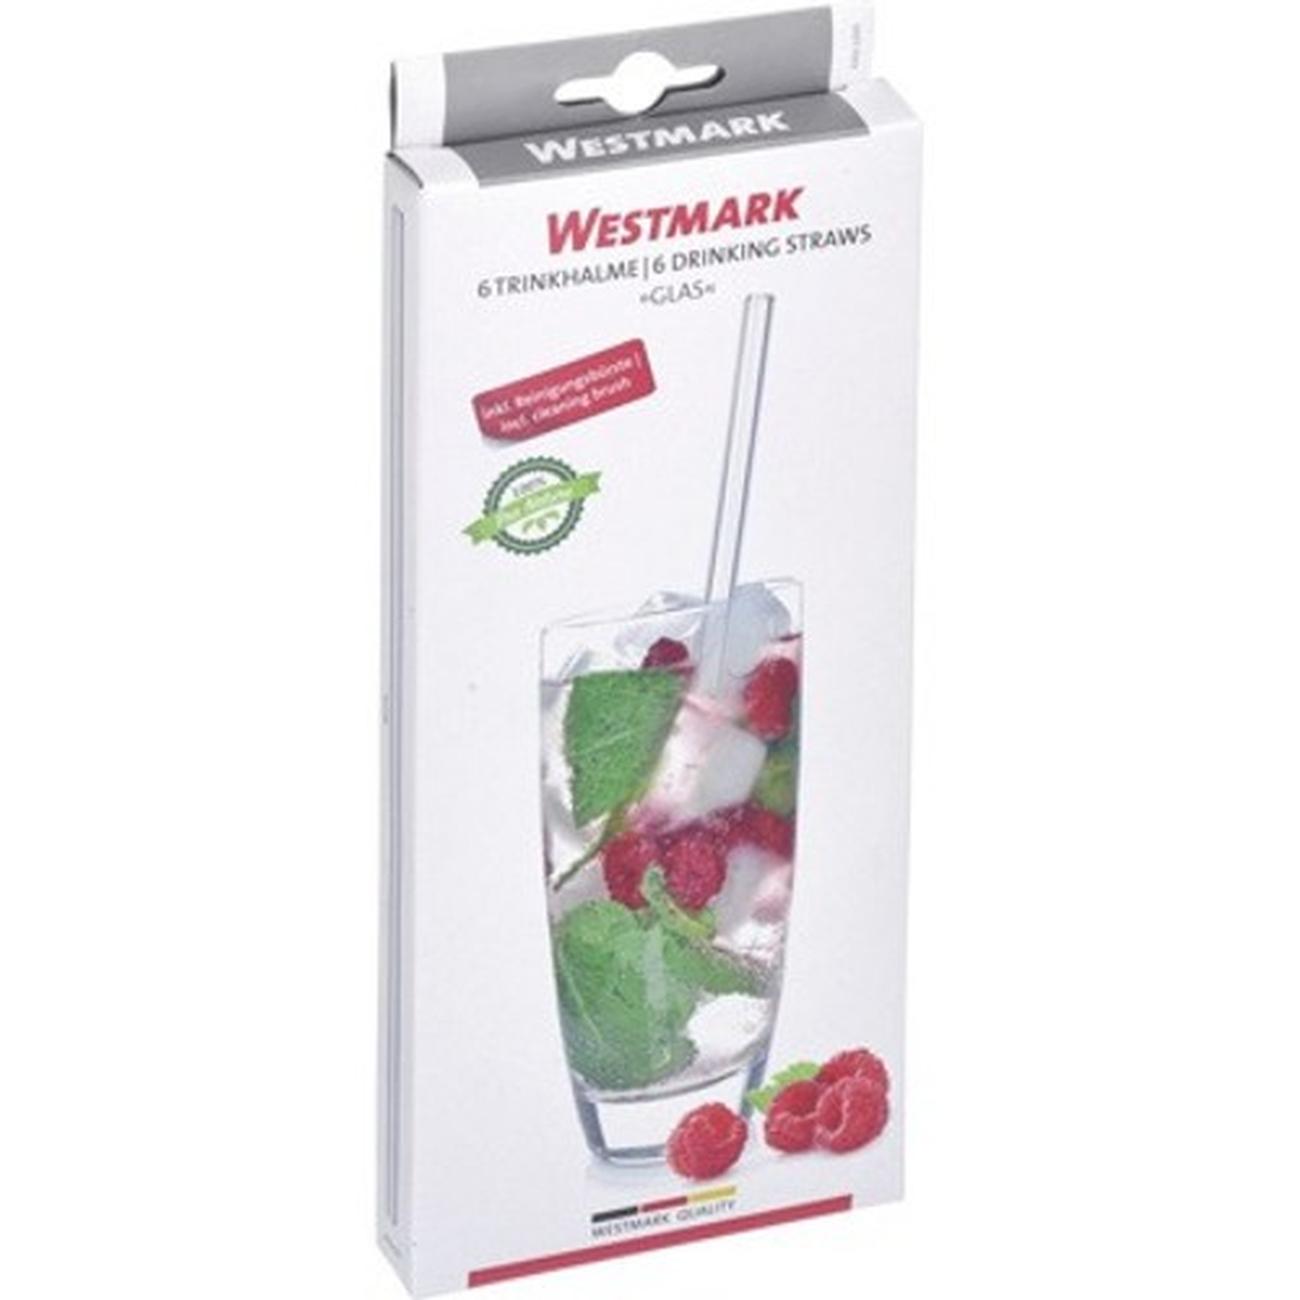 westmark-6pc-reusable-drinking-straws - Westmark 6pc Reusable Drinking Straws